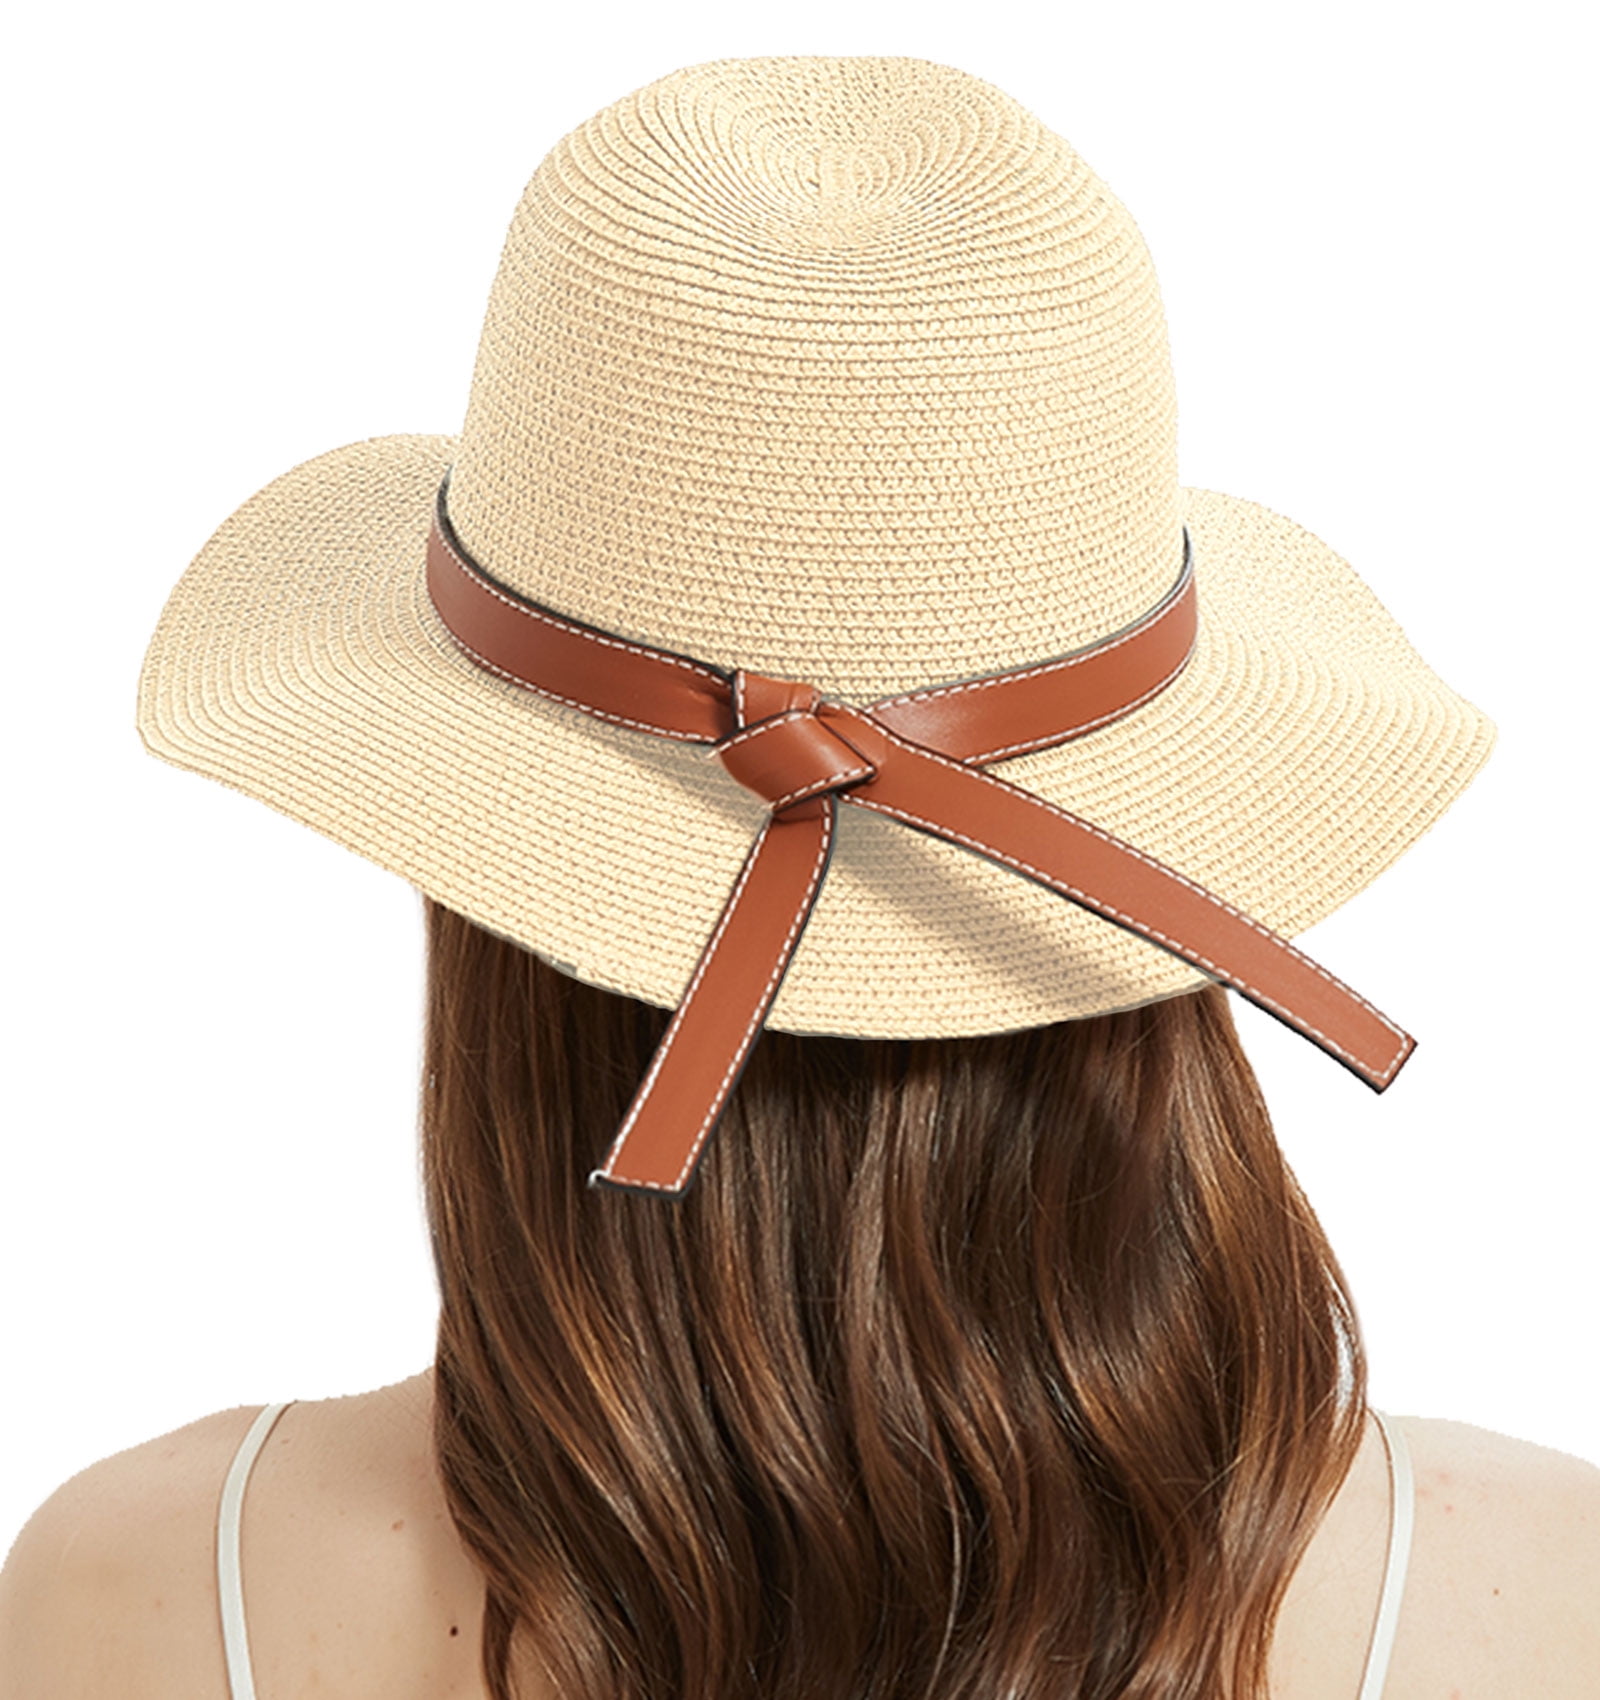 Summmer Shell Beach Hat Straw Women Visor Wide Brim Panama Sun Hats Boho Beach Cap Travel